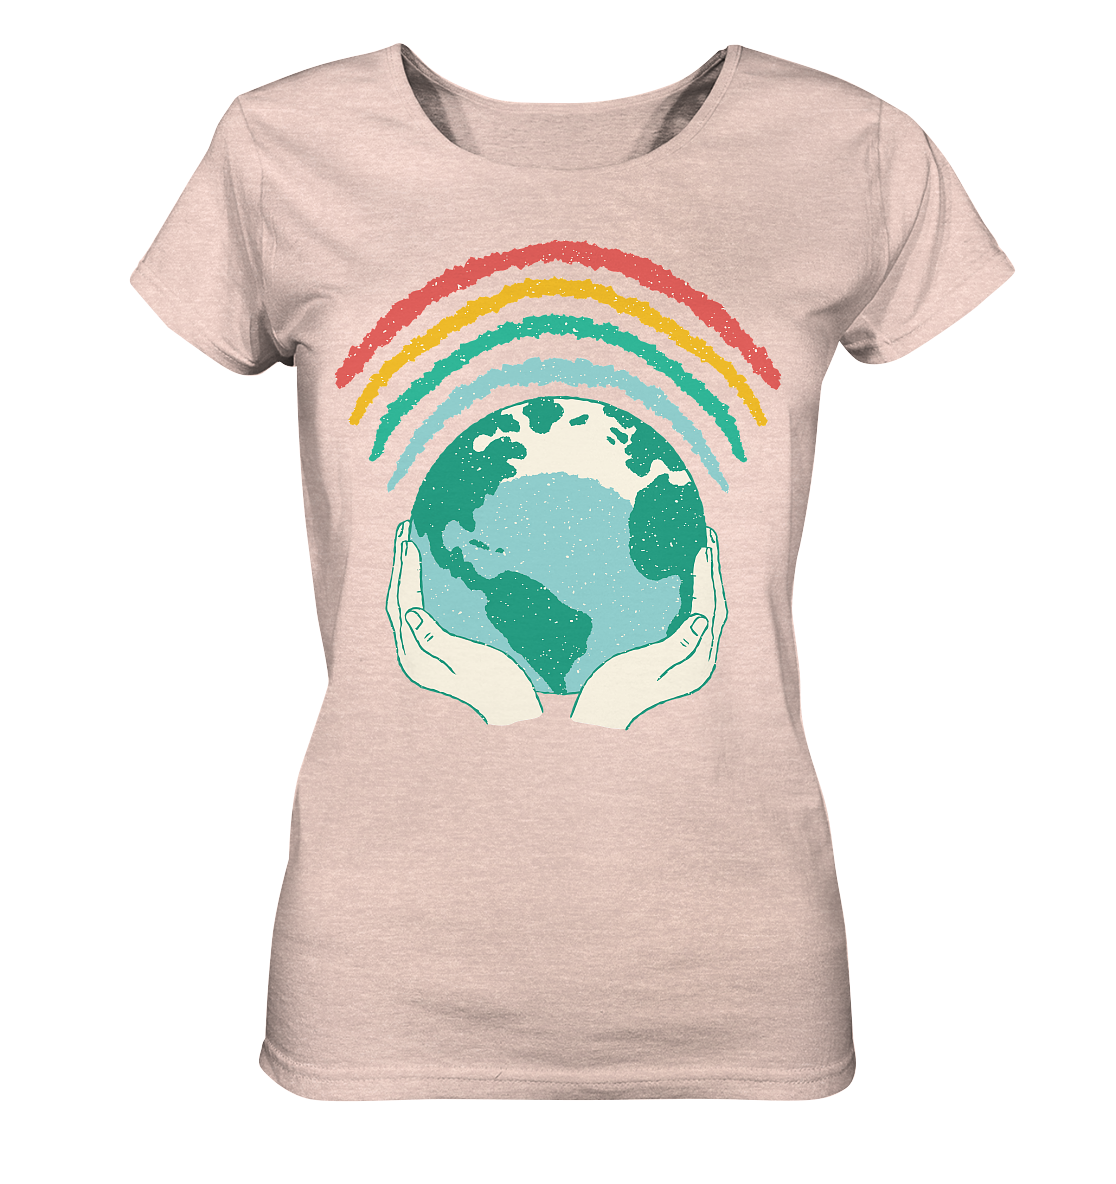 Regenbogen mit Weltkugel in Händen    - Ladies Organic Shirt (meliert)